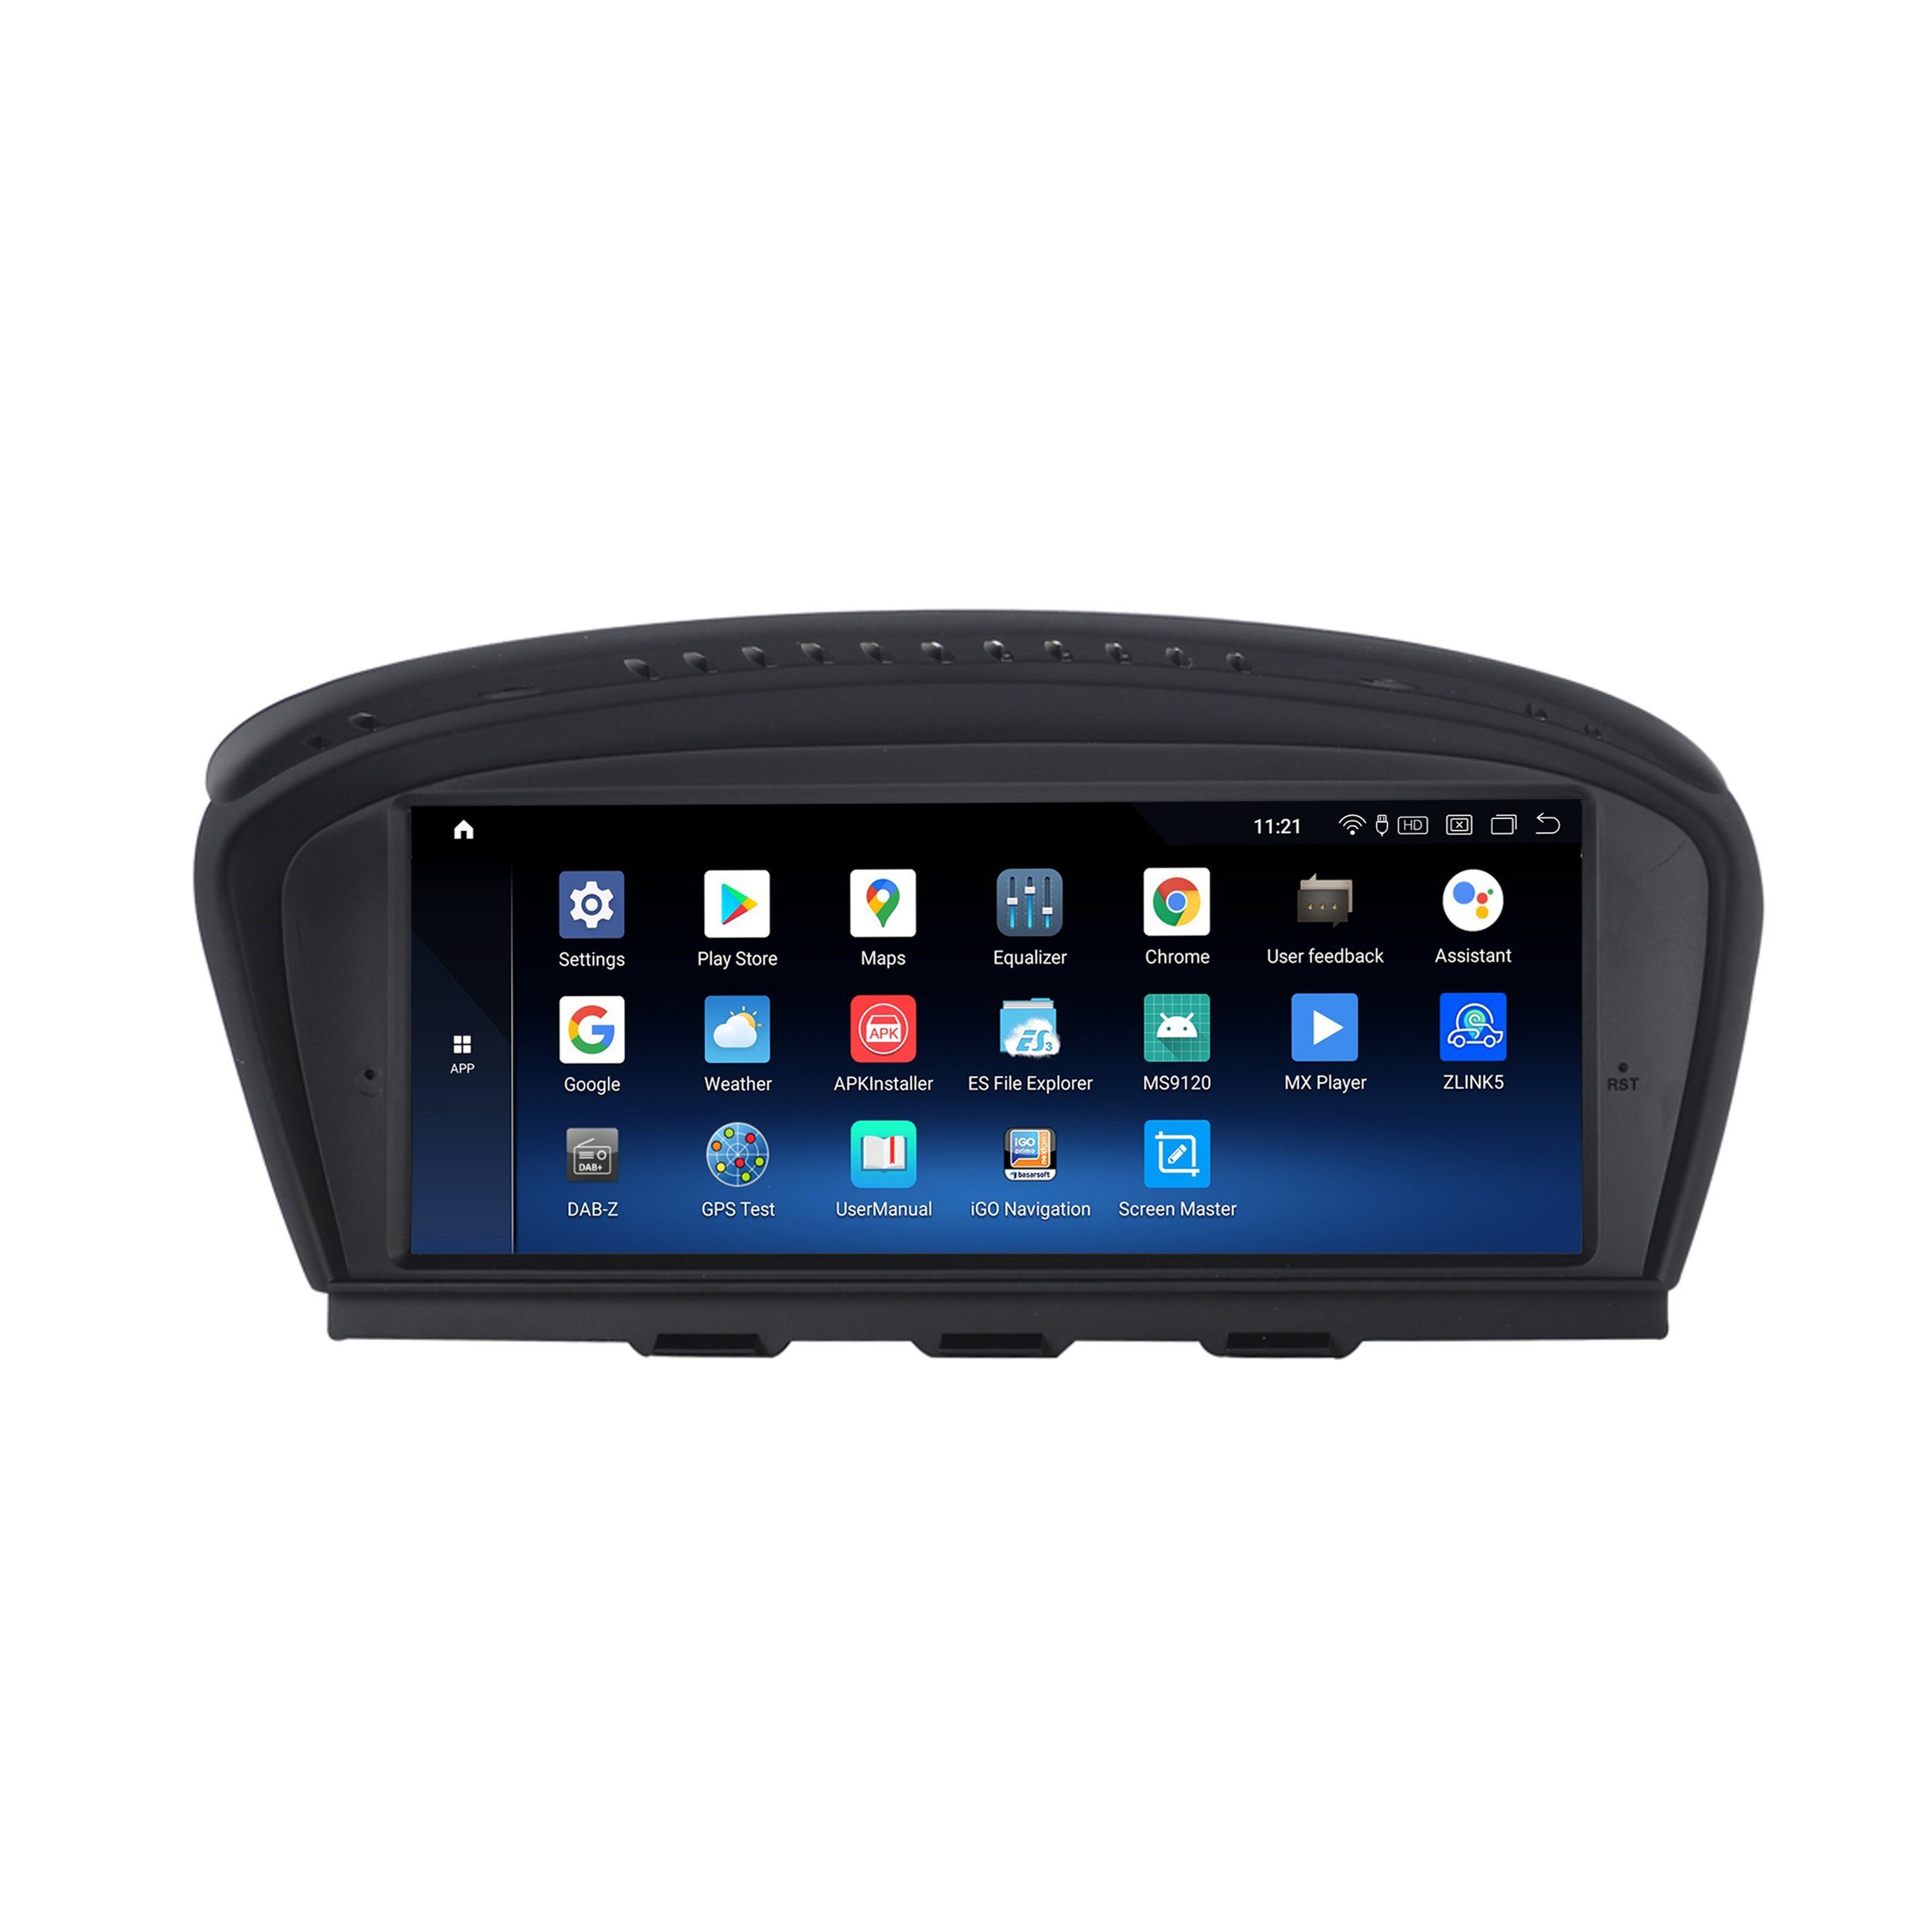 TAFFIO Für BMW E65 E66 ADAPTER AUX 8.8" Einbau-Navigationsgerät Android + GPS Touchscreen CarPlay